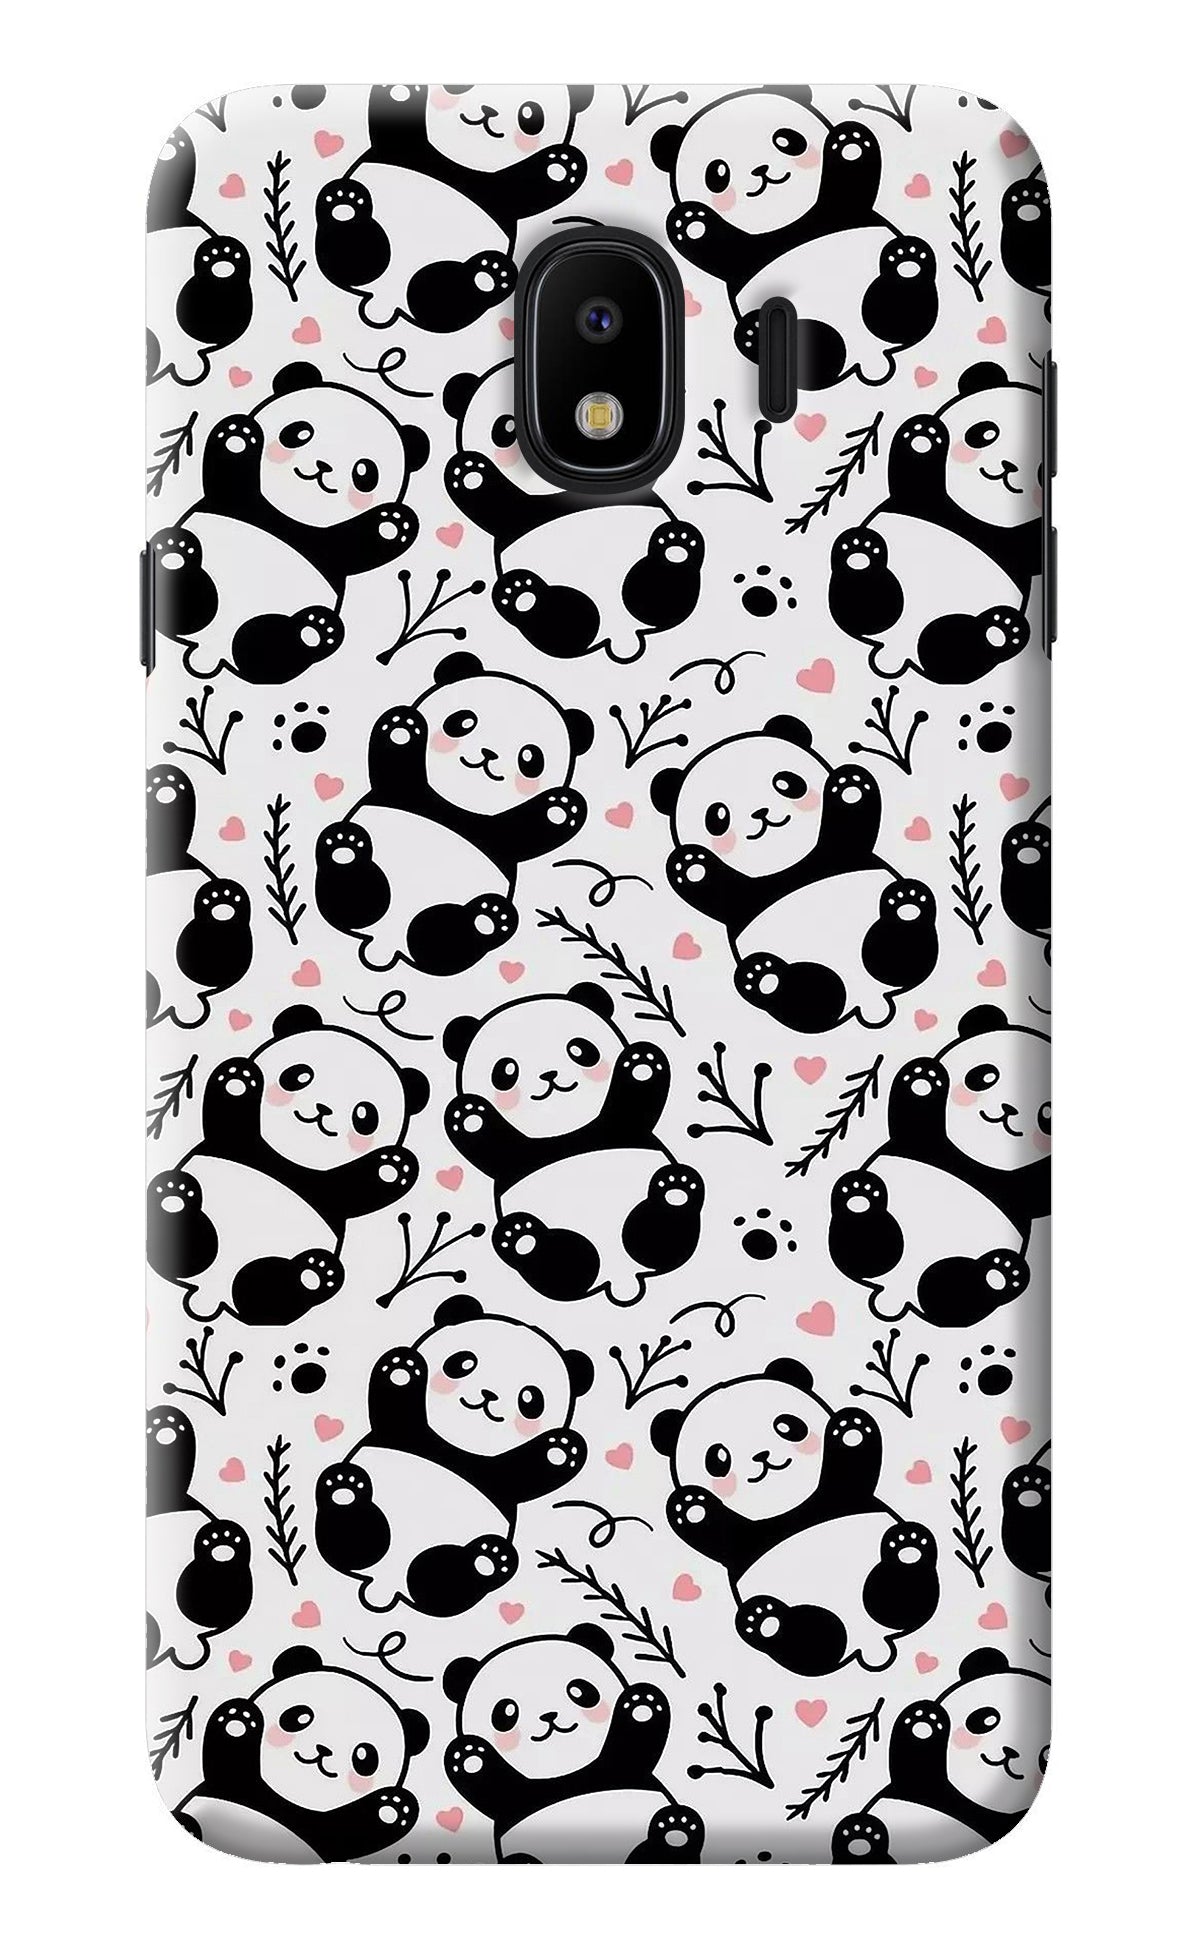 Cute Panda Samsung J4 Back Cover